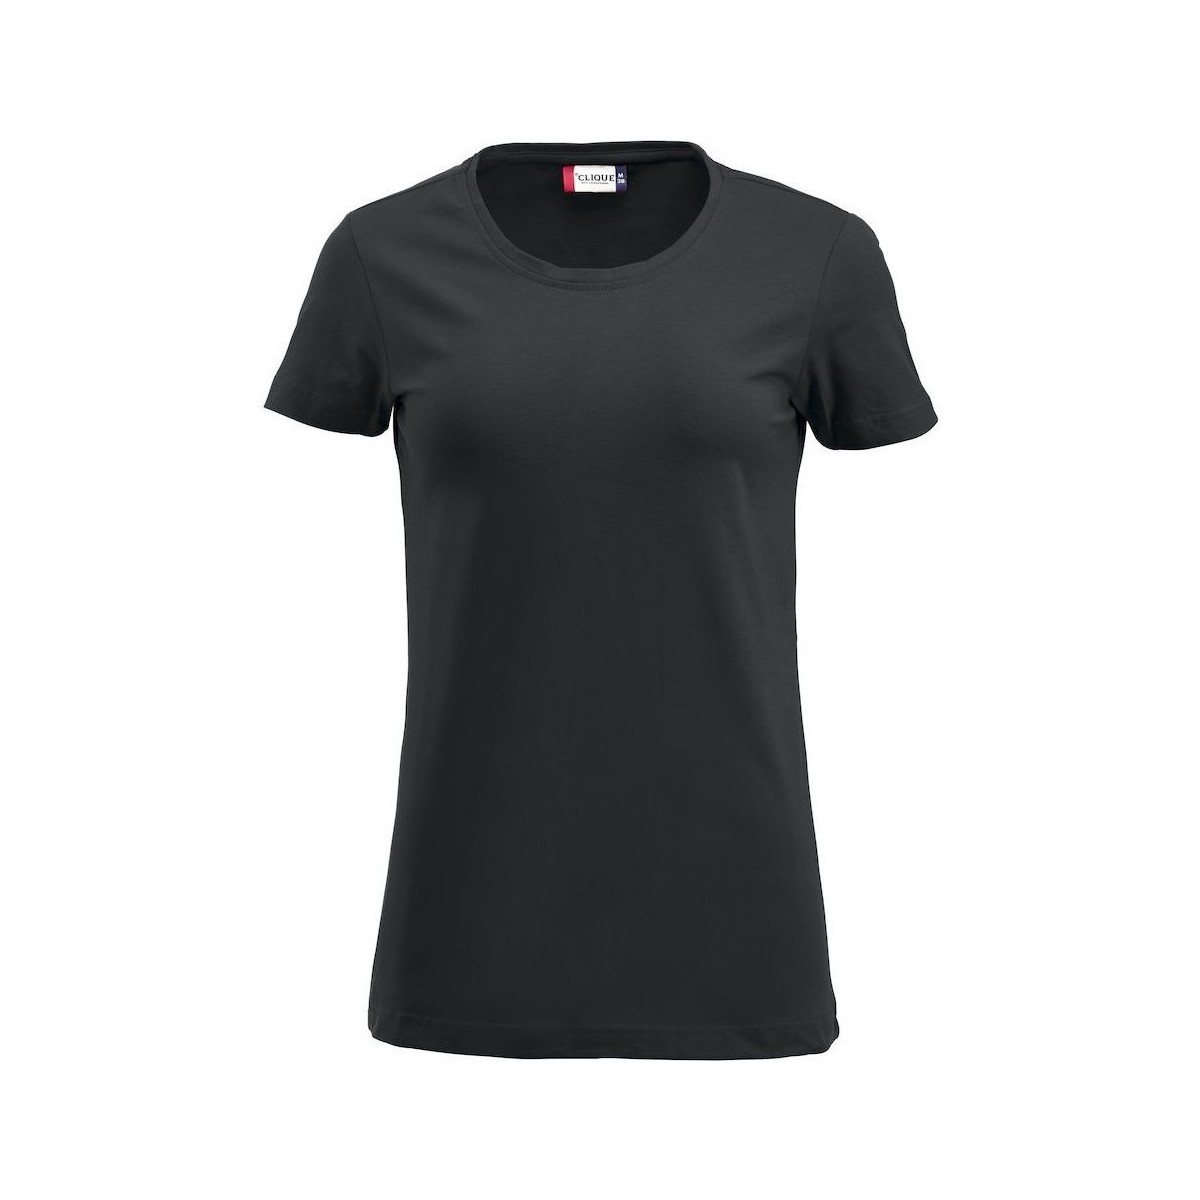 textil Mujer Camisetas manga larga C-Clique Carolina Negro